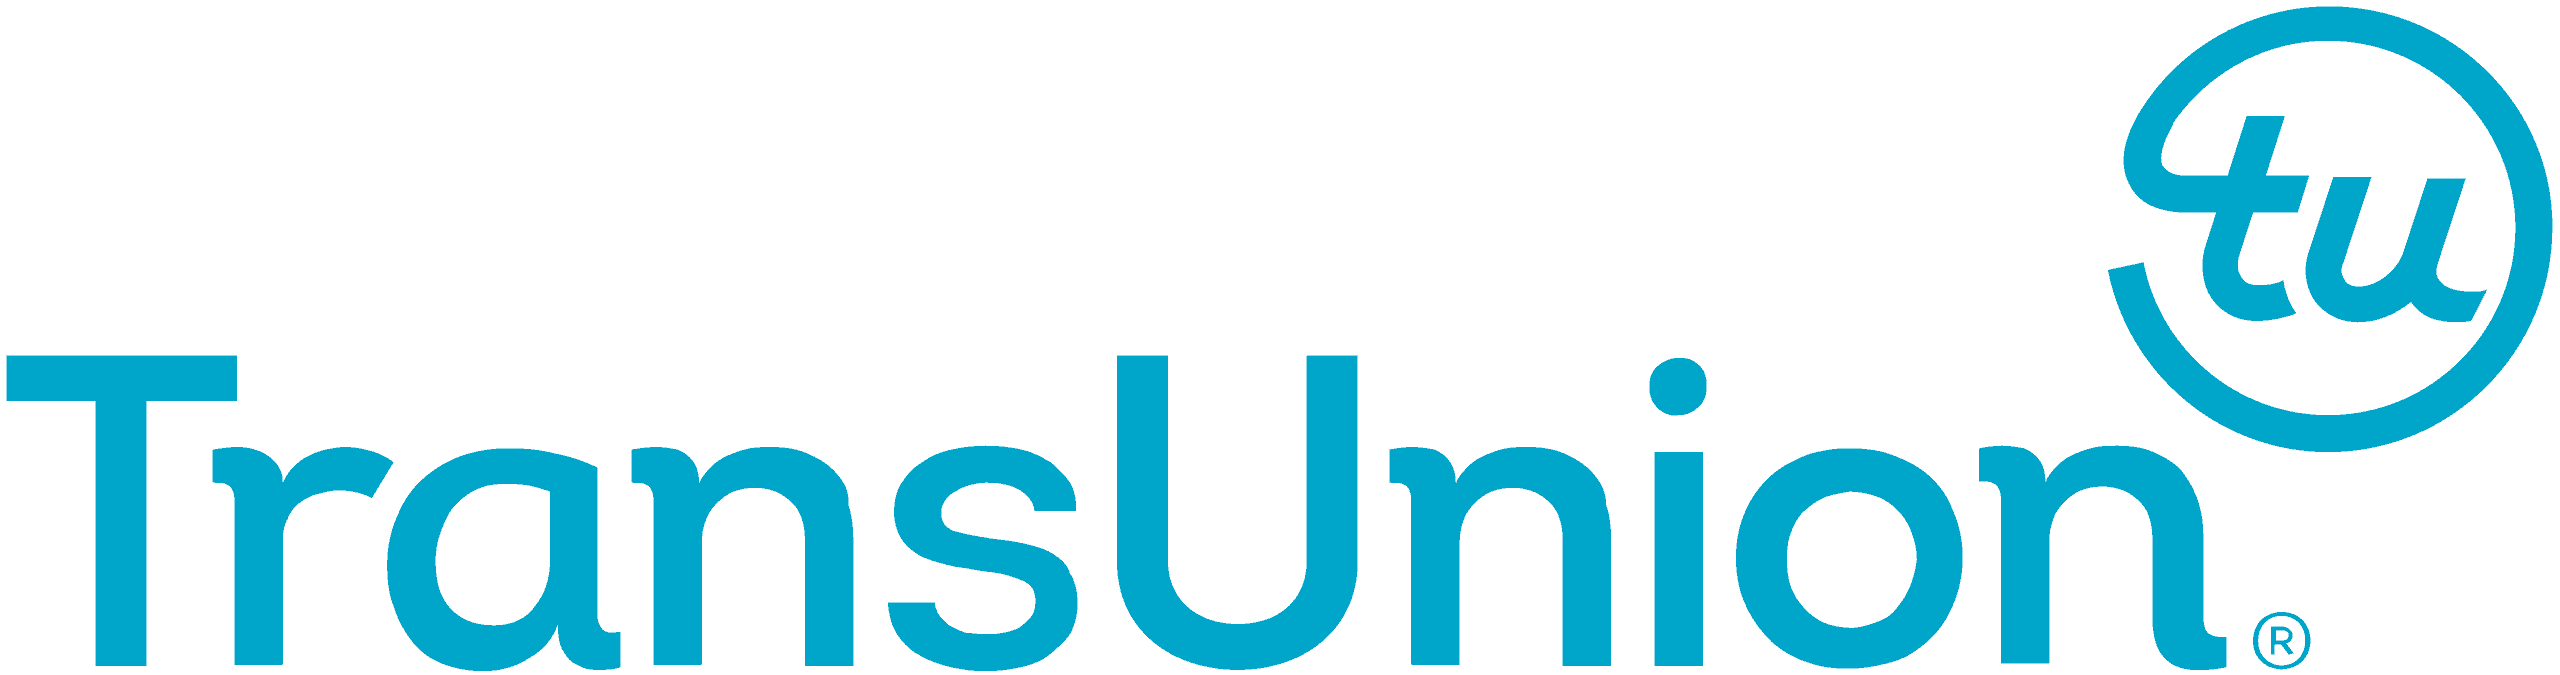 TransUnion_logo